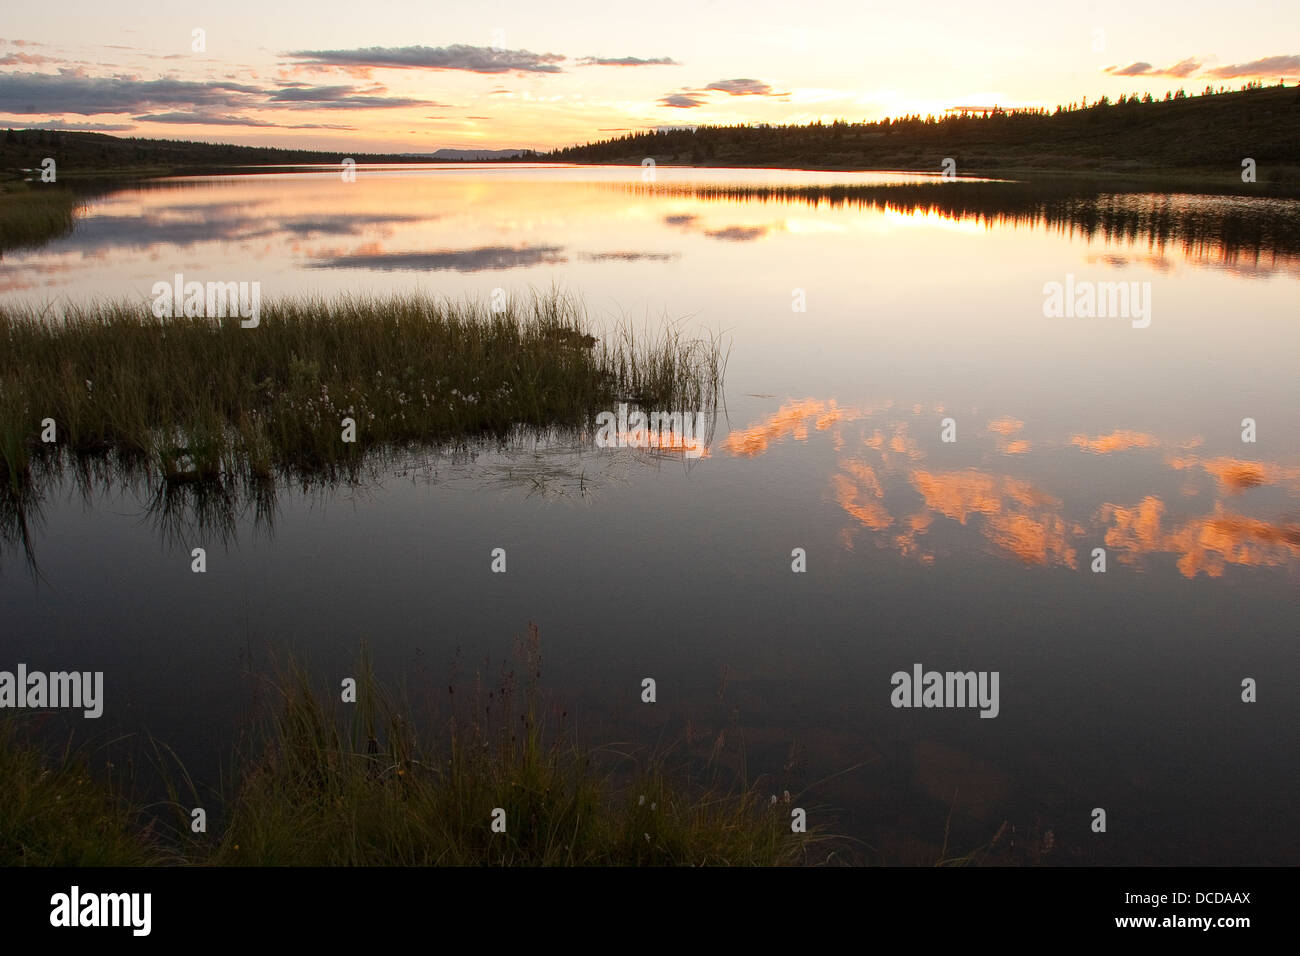 Abendstimmung an einem See in Skandinavien, Norwegen, Sonnenuntergang, Evening mood in a lake in Scandinavia, Norway, sundown Stock Photo